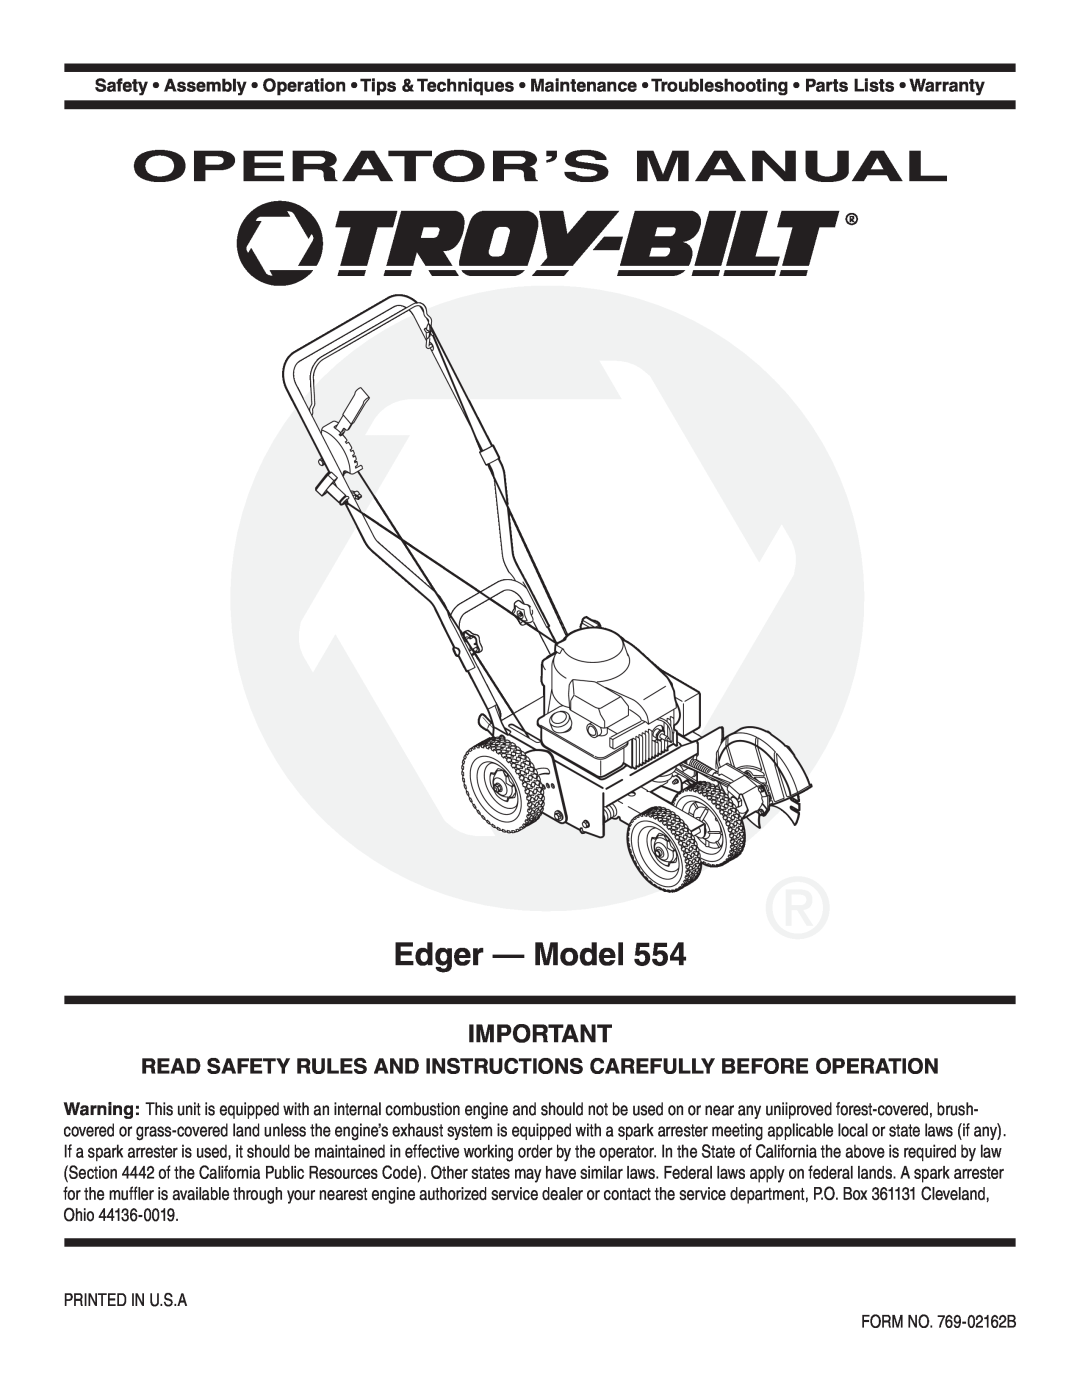 Troy-Bilt 554 manual Operator’S Manual, Edger - Model 